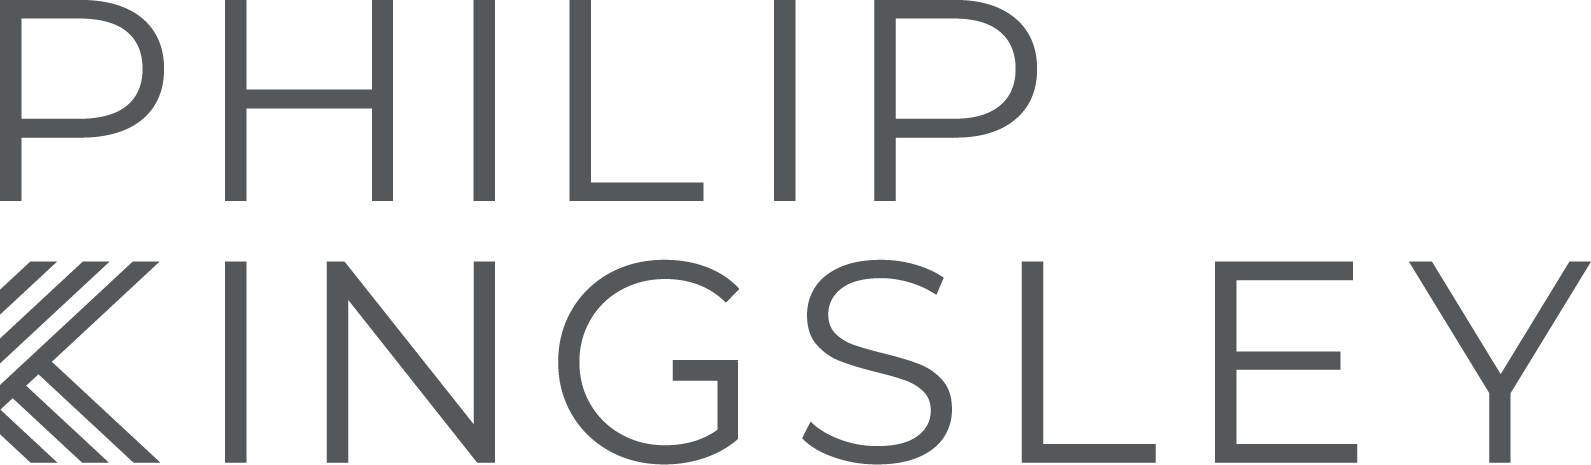 Philip Kingsley logo. Philips Kingsley лого. Трихологи Philip Kingsley. Philip Kingsley дизайн.